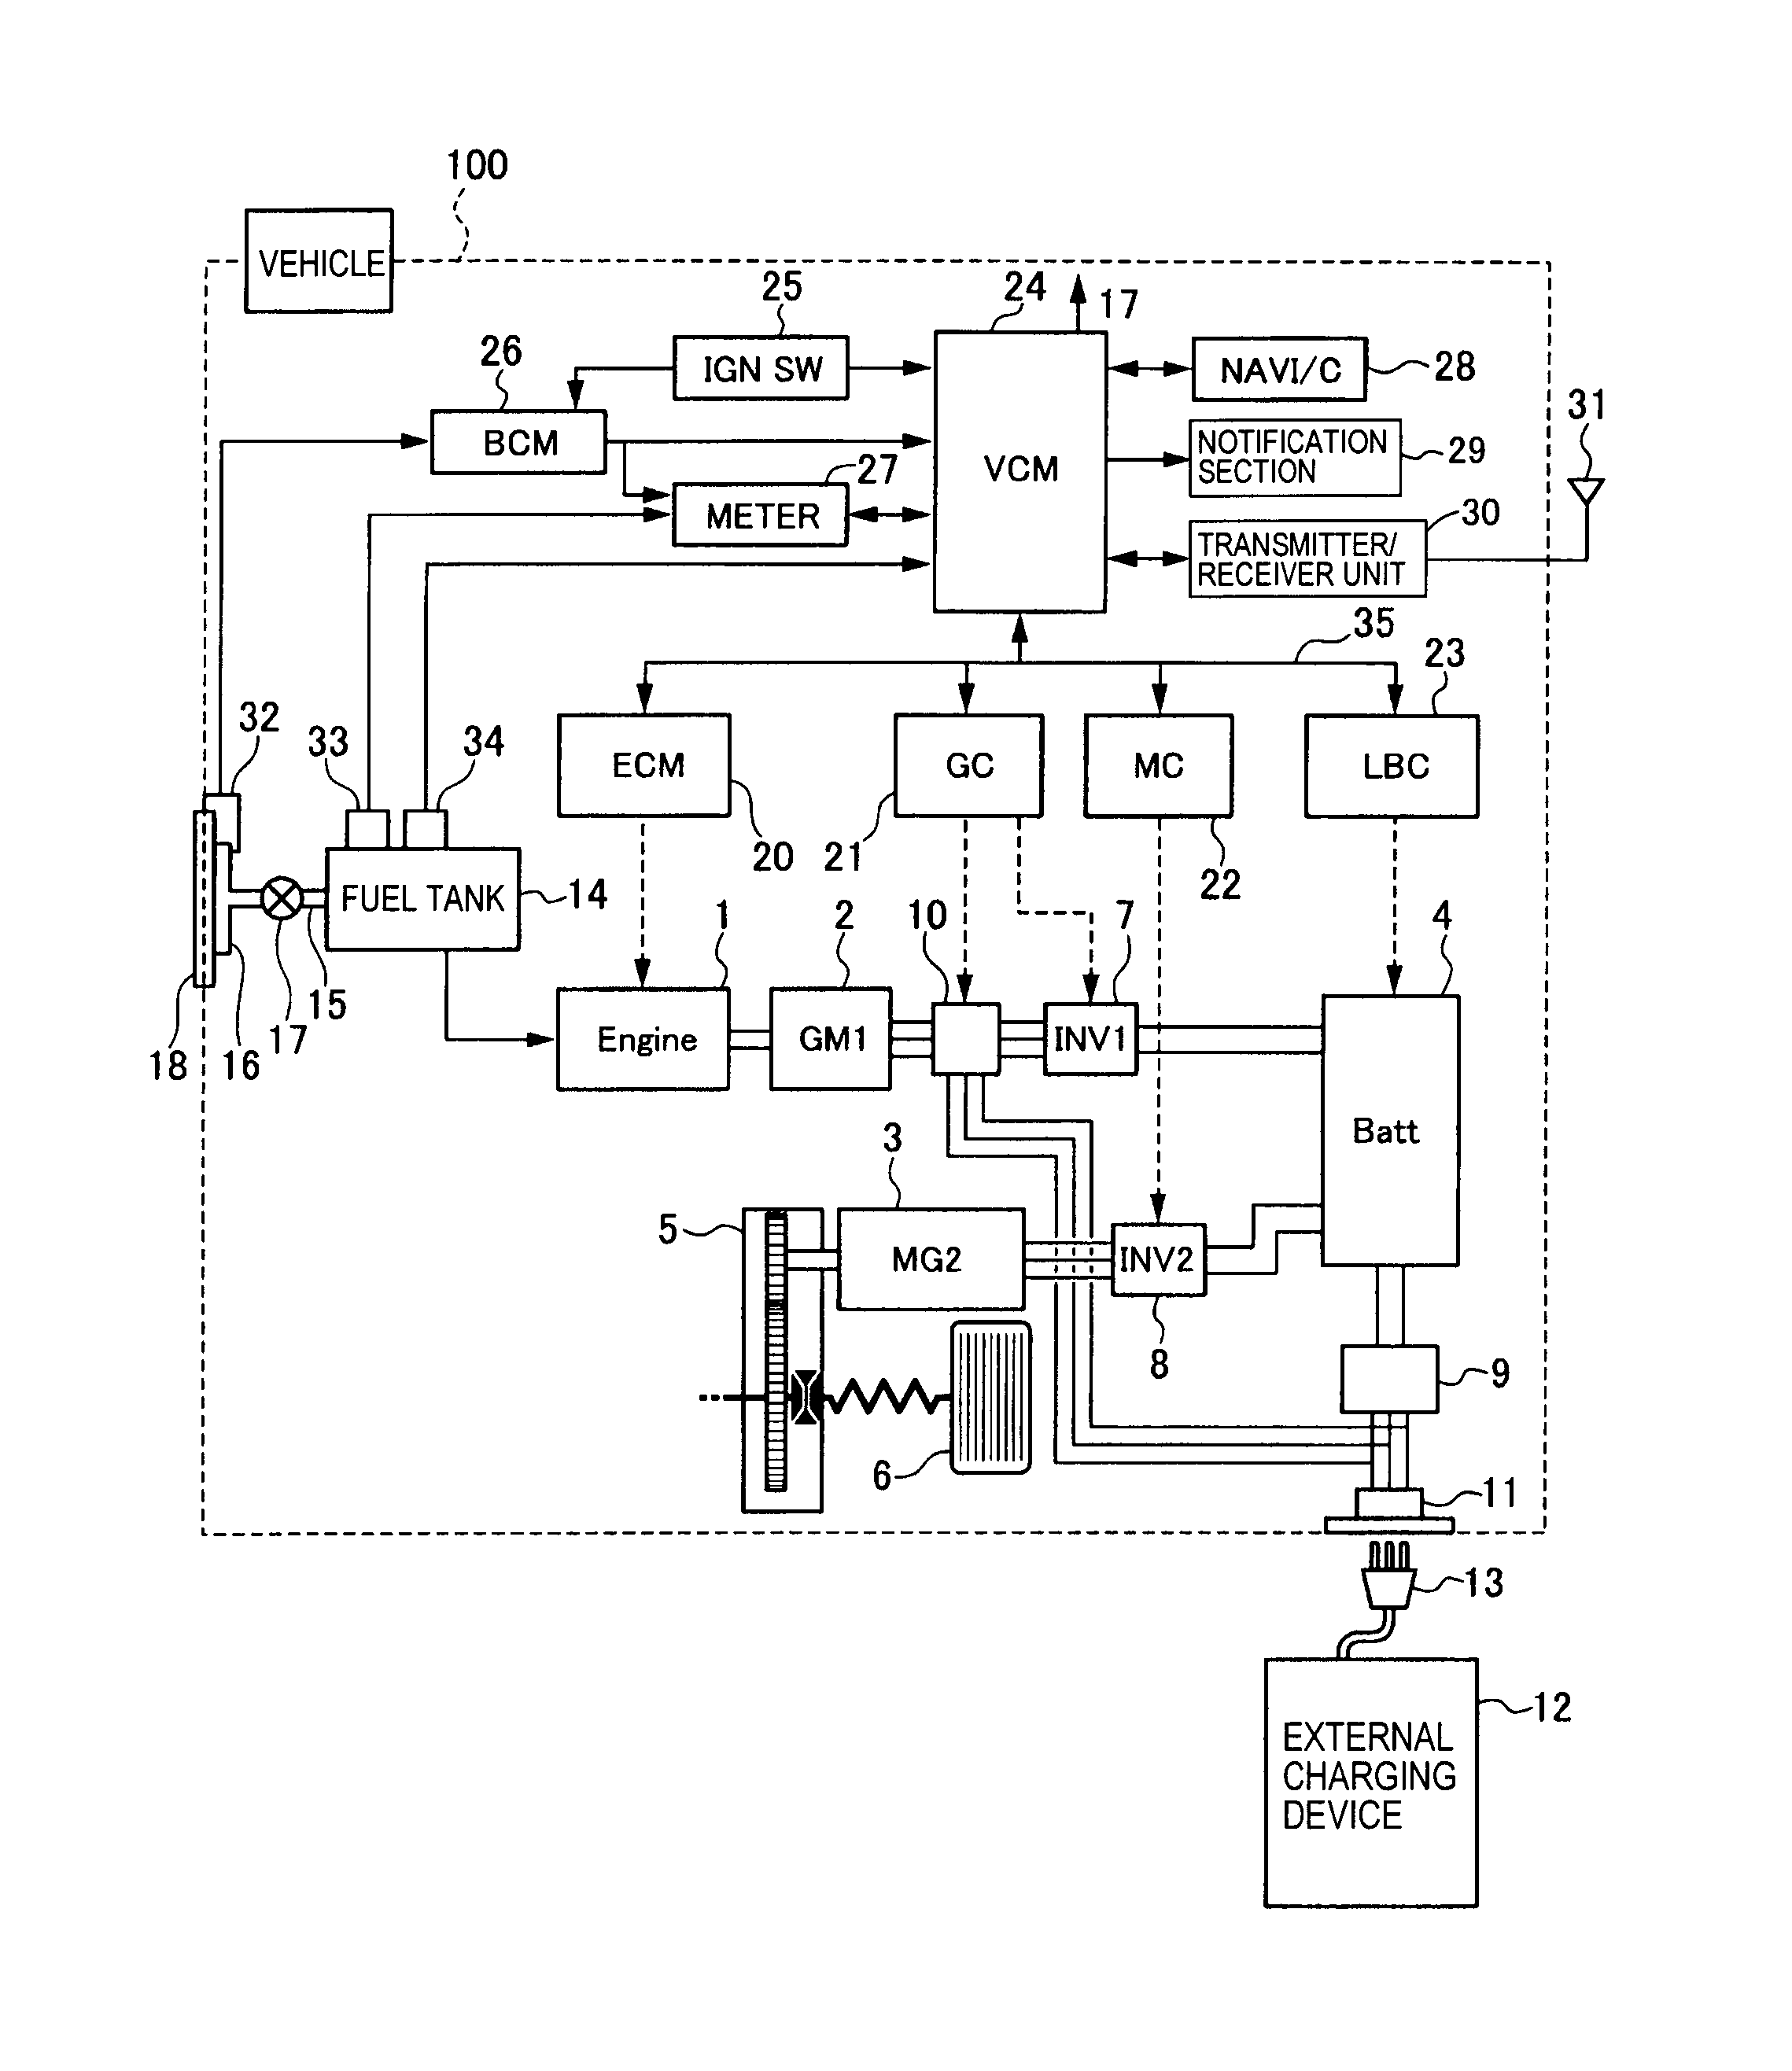 1794-aent wiring diagram